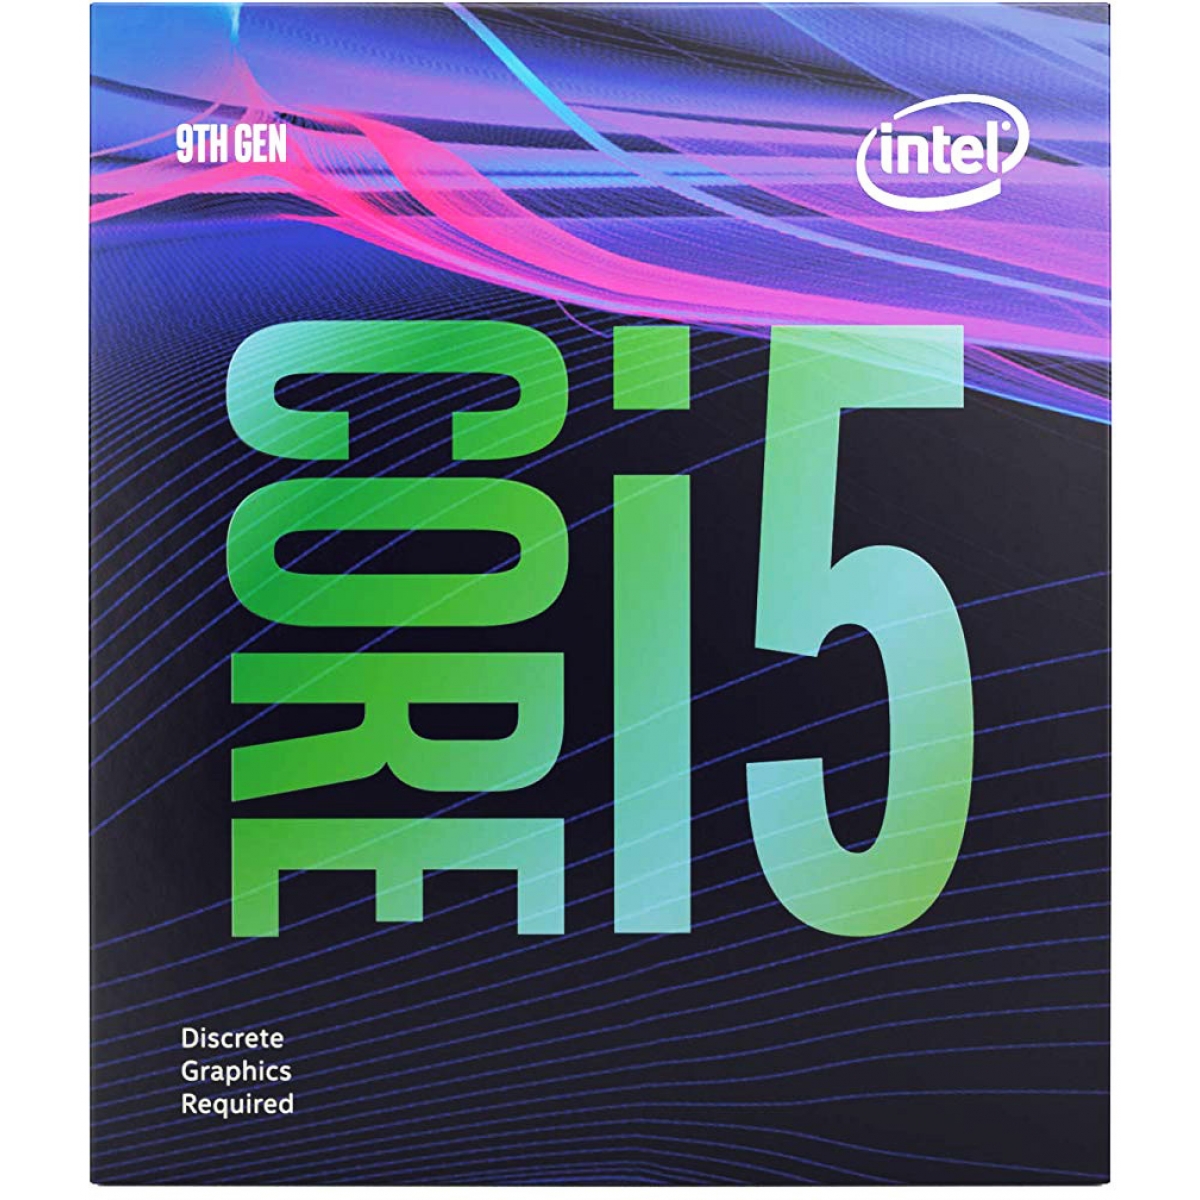 Processador Intel Core i5 9400F 2.90GHz (4.10GHz Turbo), 9ª Geração, 6-Core 6-Thread, LGA 1151, BX80684I59400F - Open Box